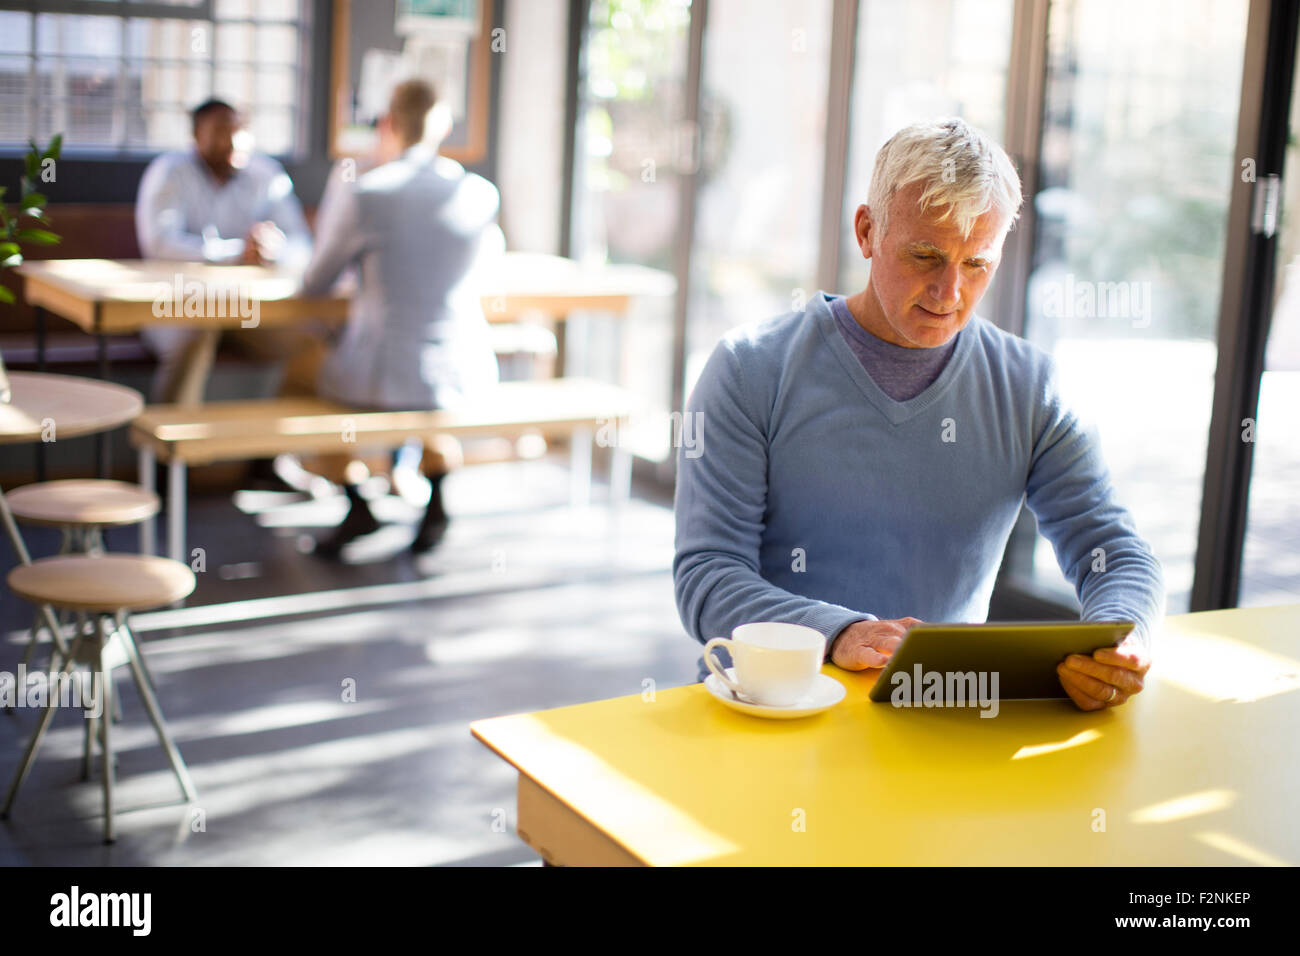 Older man using digital tablet in cafe Stock Photo